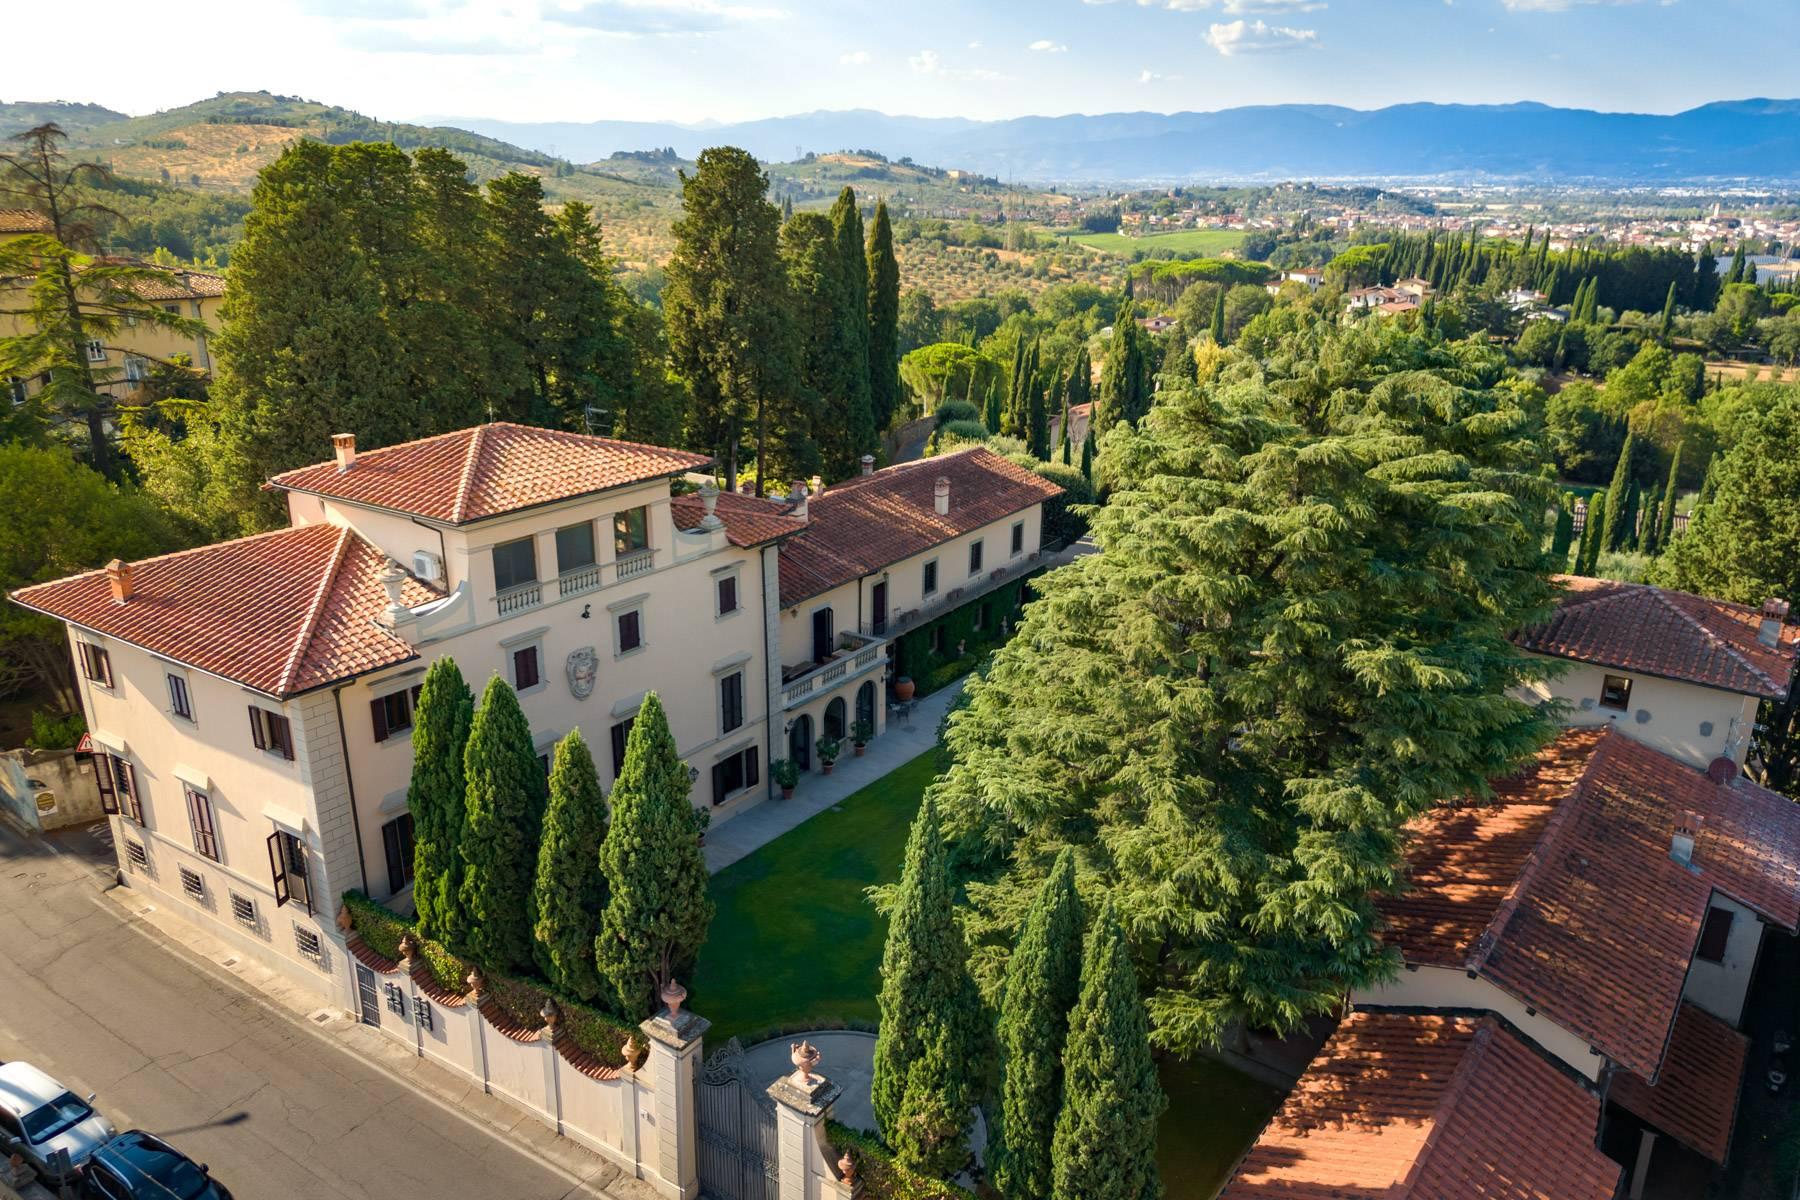 Apartment in a historic villa on the hills of Carmignano - 15